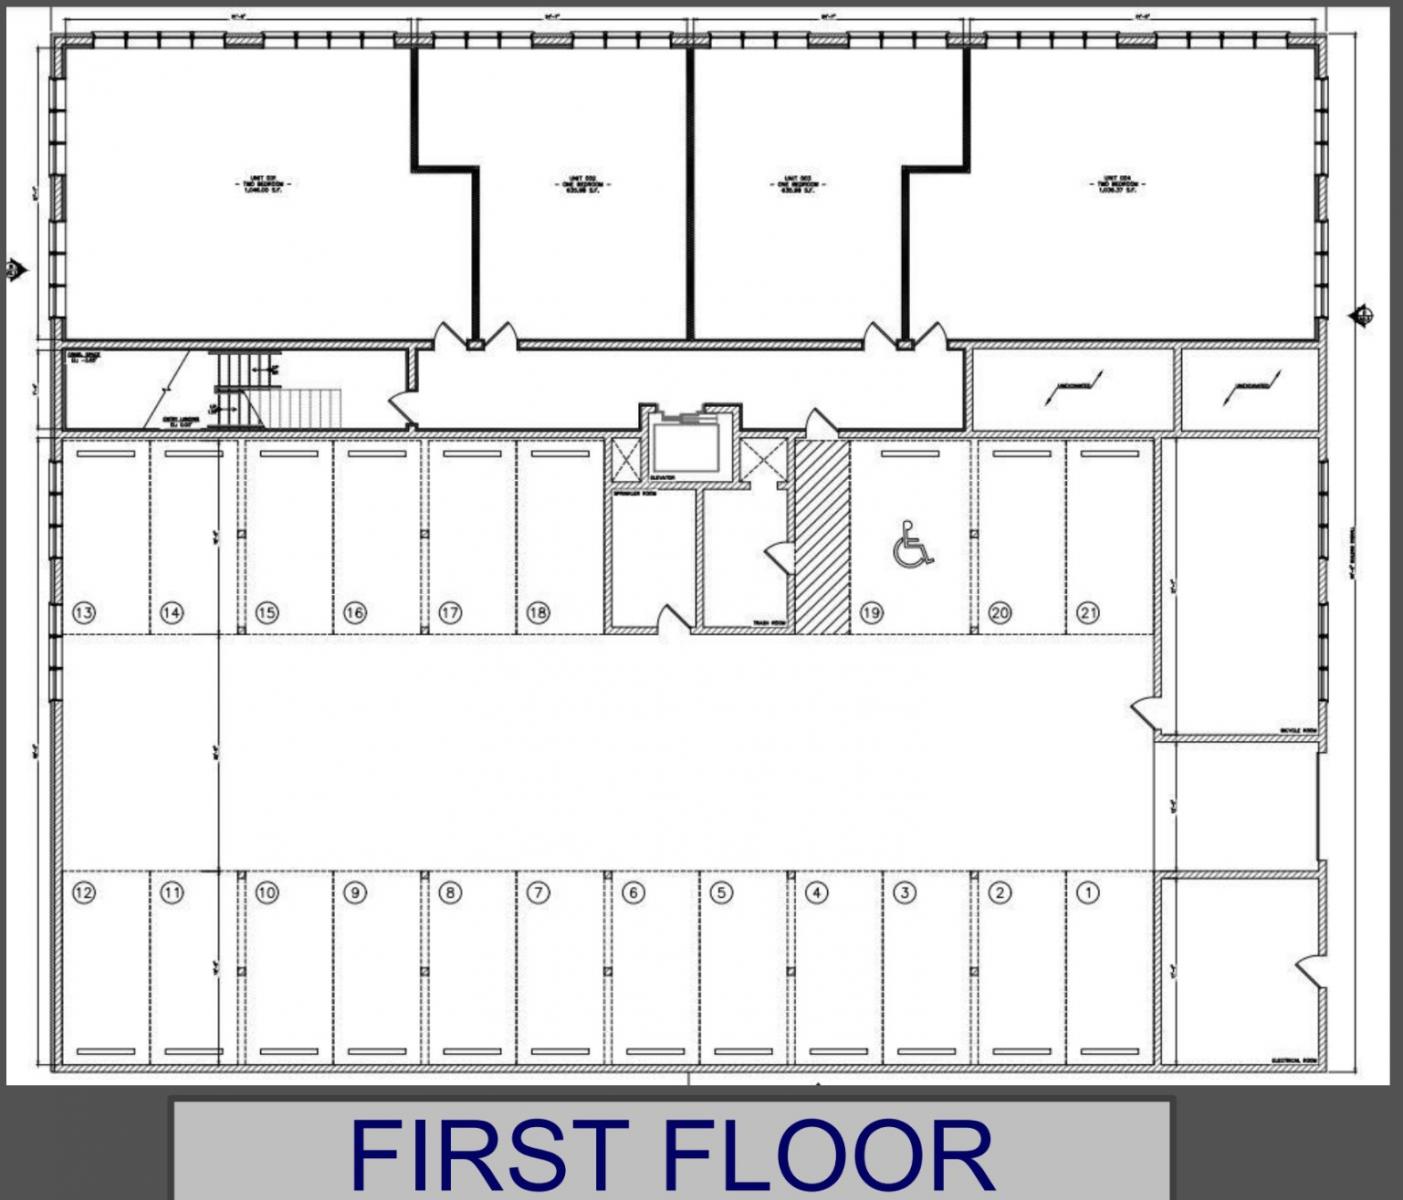 First floor plan of 2429 W Fullerton Avenue